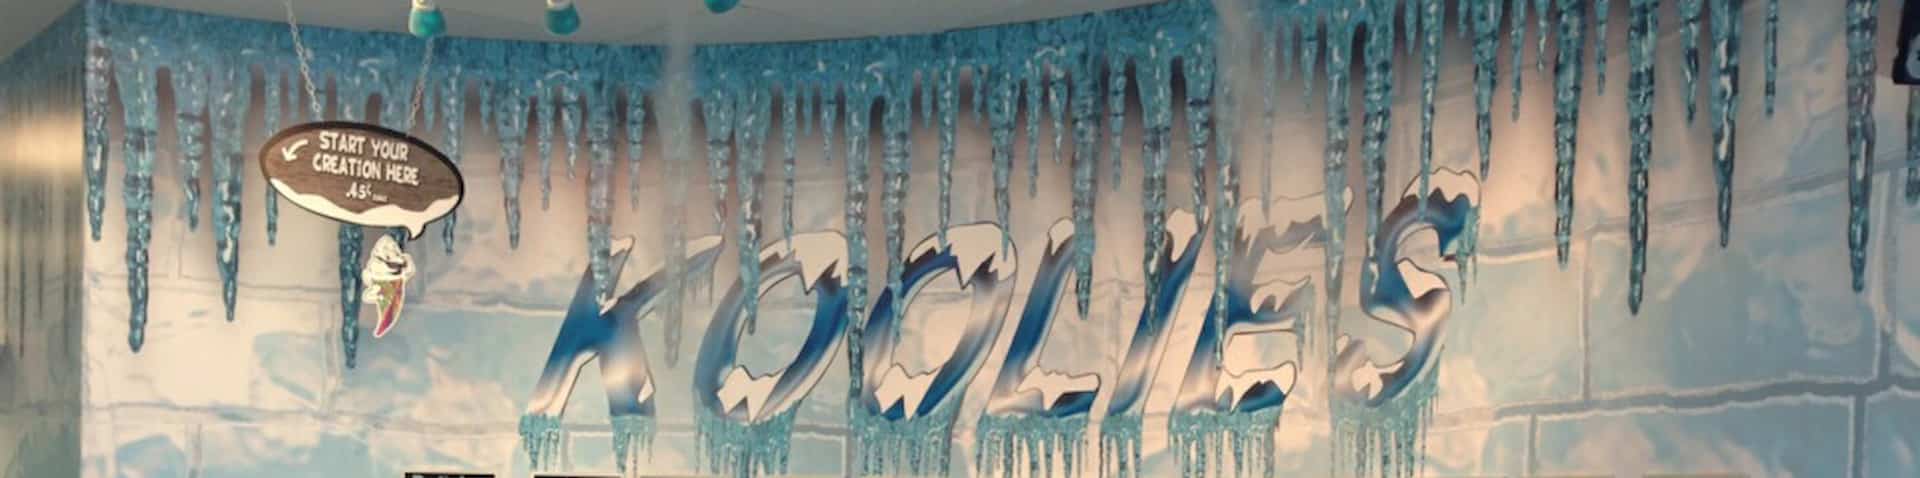 koolies art work above frozen yogurt stations